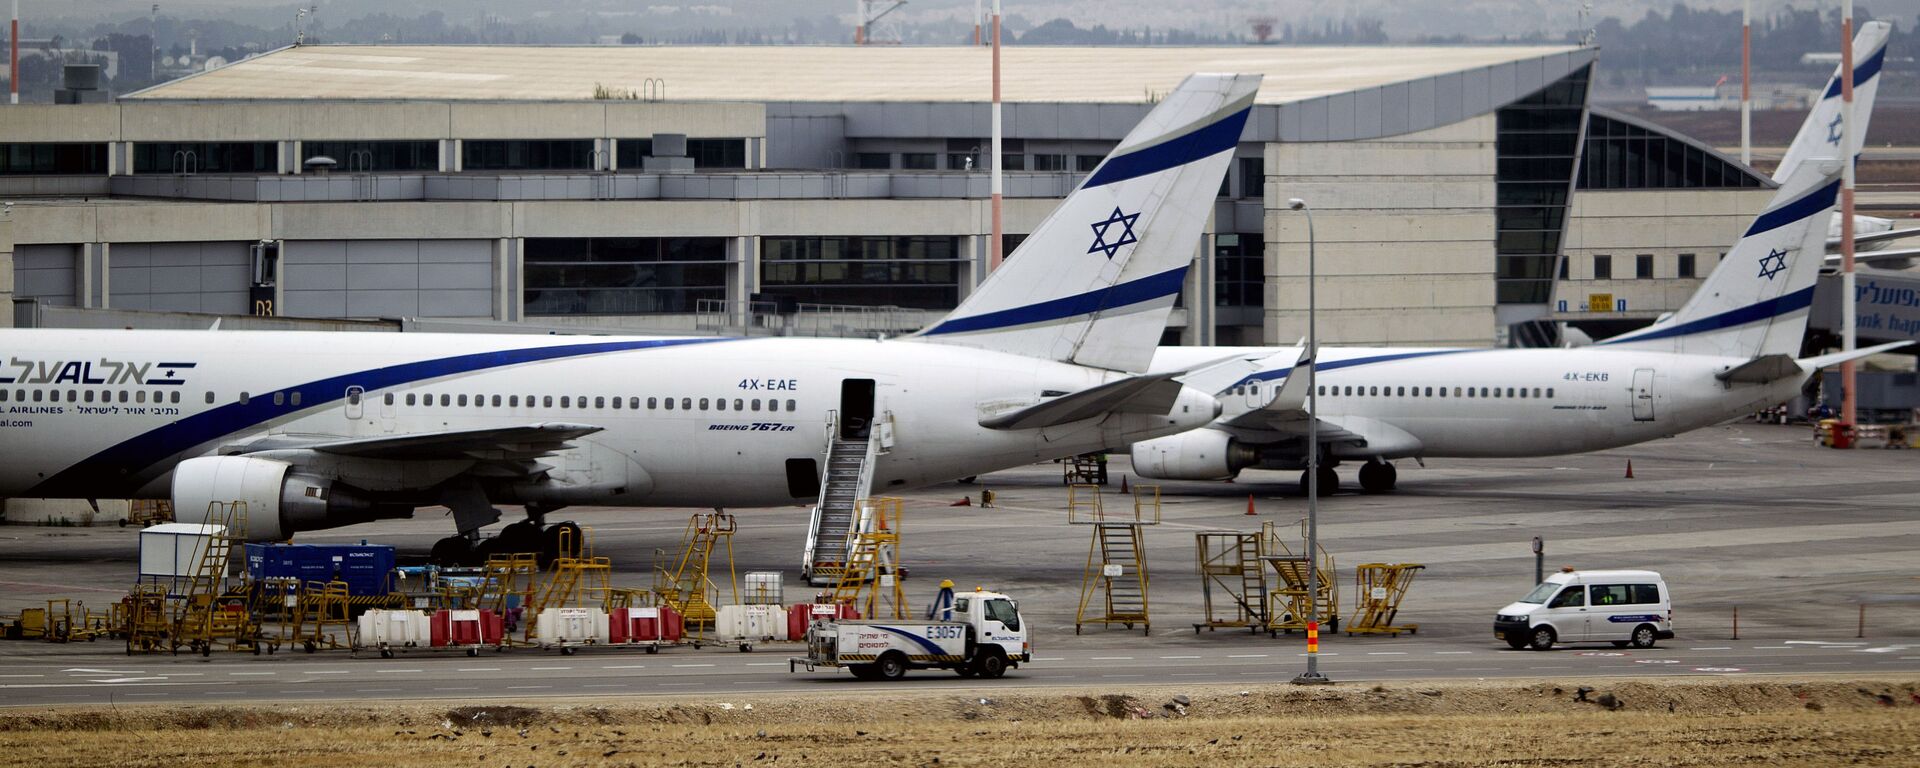 مطار بن غوريون الدولي في تل أبيب، إسرائيل 21 أبريل/ نيسان 2013 - سبوتنيك عربي, 1920, 04.01.2022